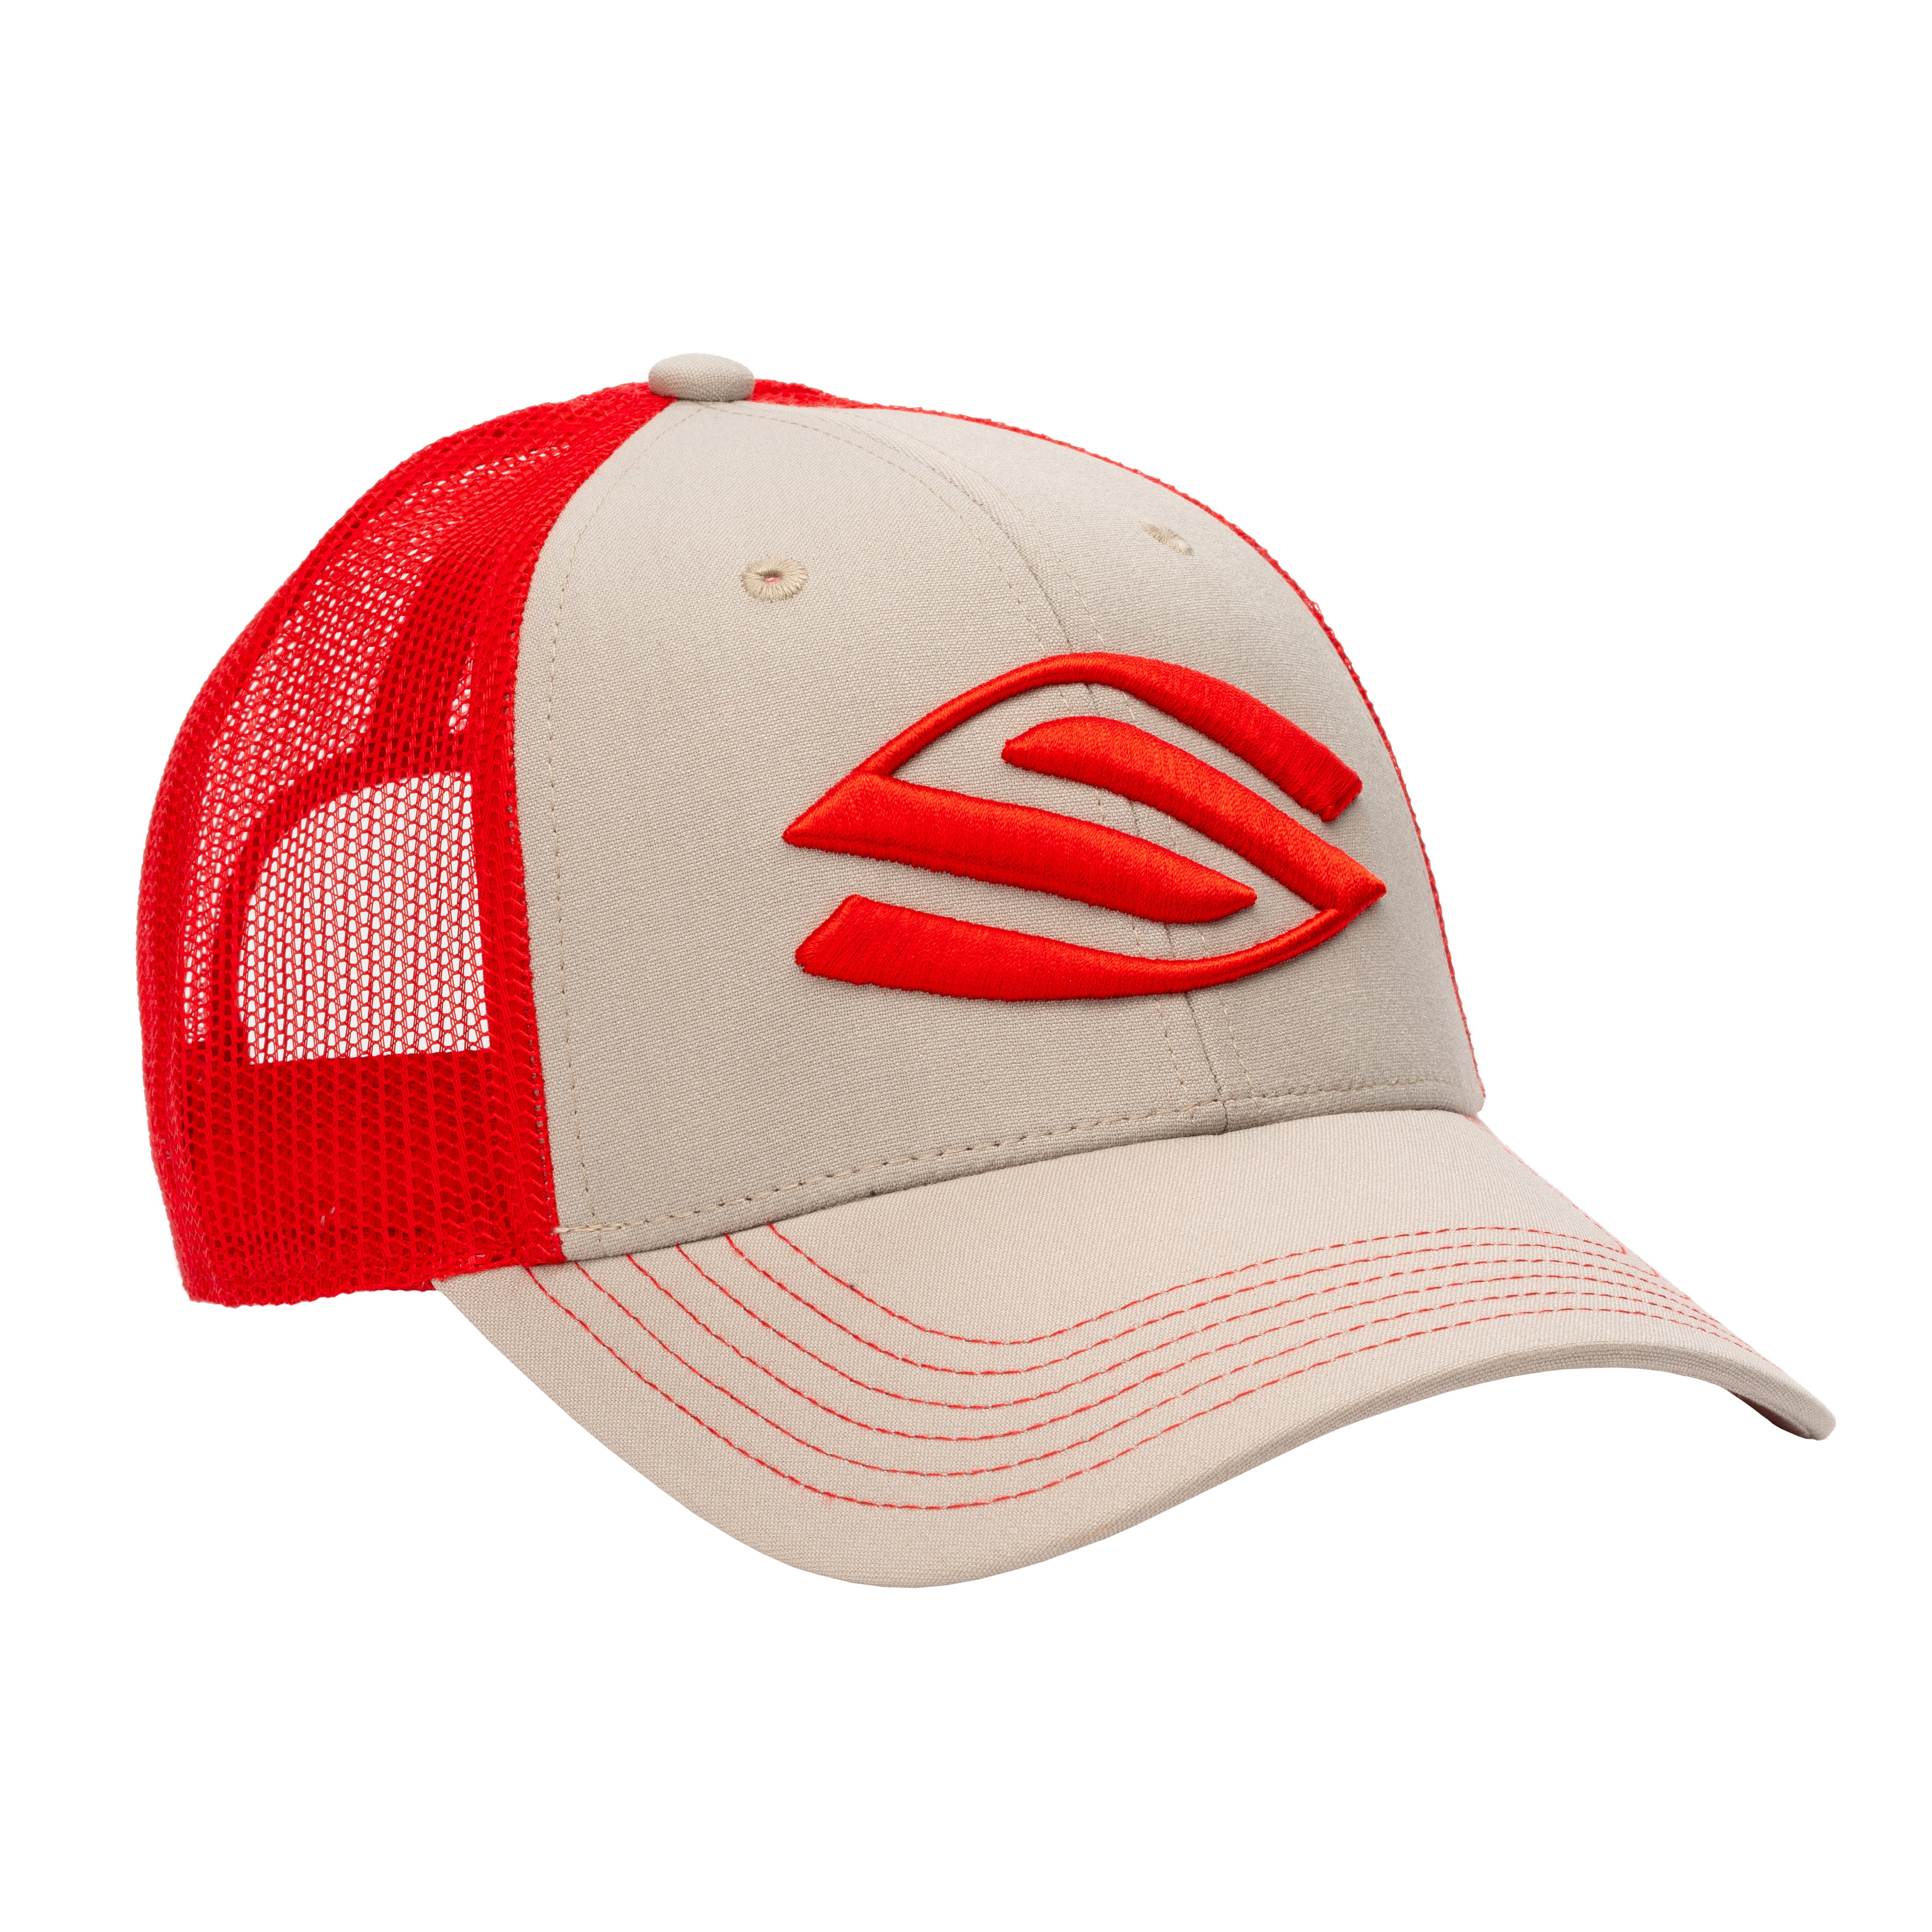 Amped Red Selkirk Amped Trucker Hat